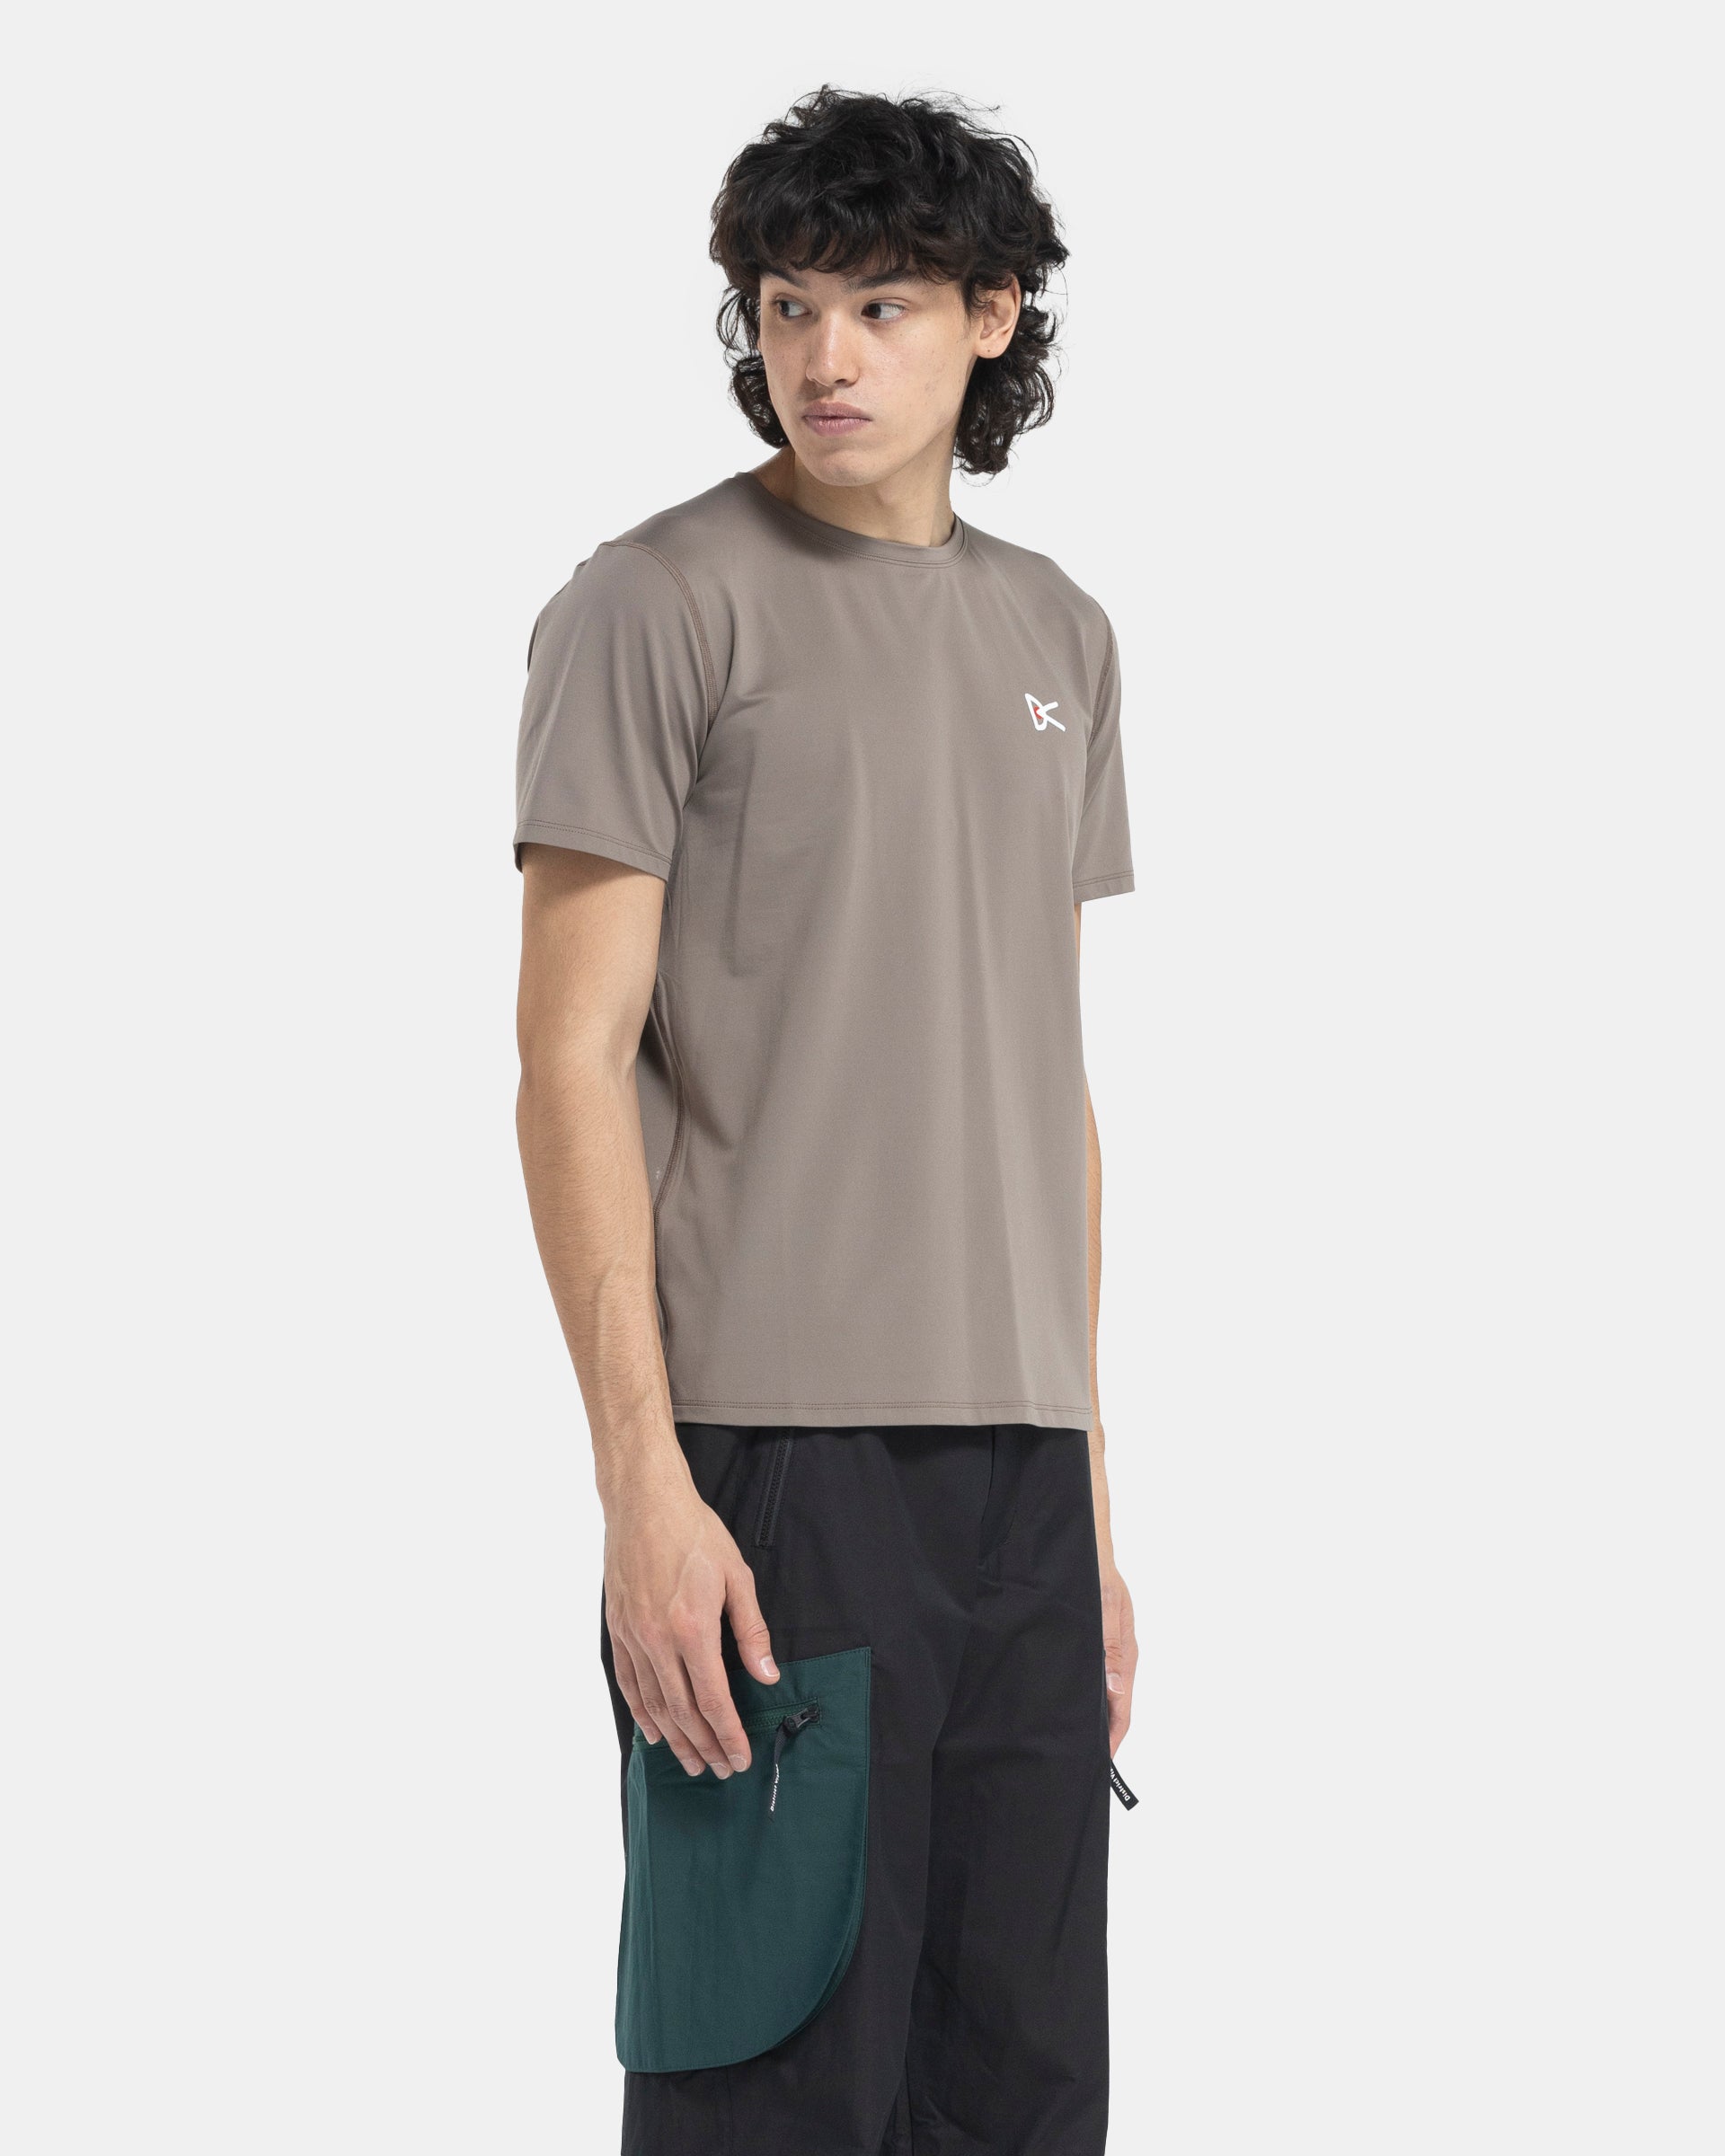 Deva Short Sleeve T-Shirt in Silt